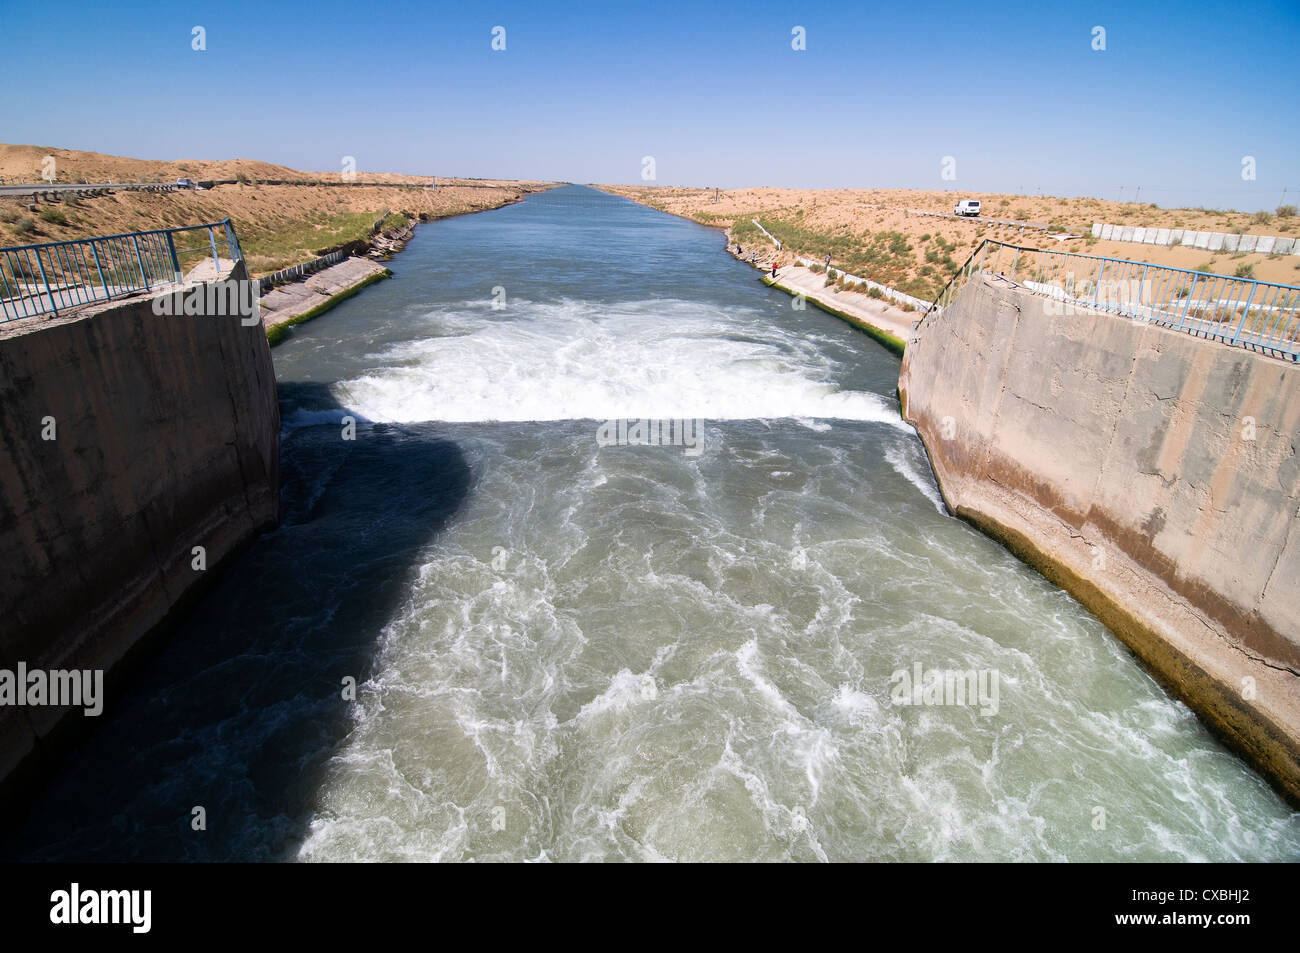 Un grande canale di irrigazione in Uzbekistan. L'acqua viene deviata dall'Amu Darya river. Foto Stock